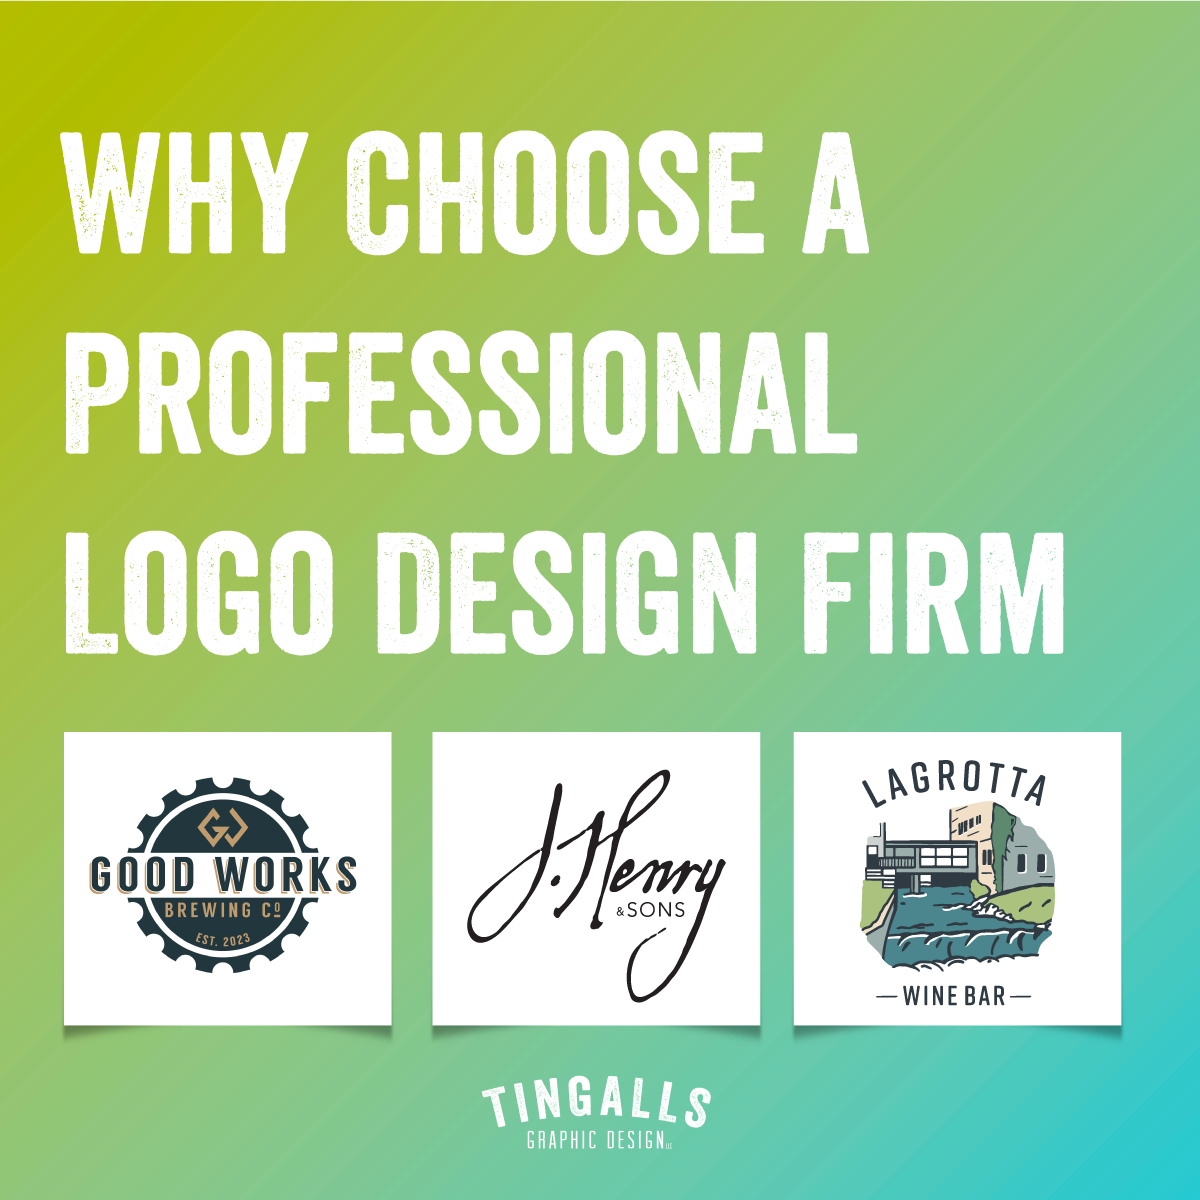 Choosing a professional logo design firm